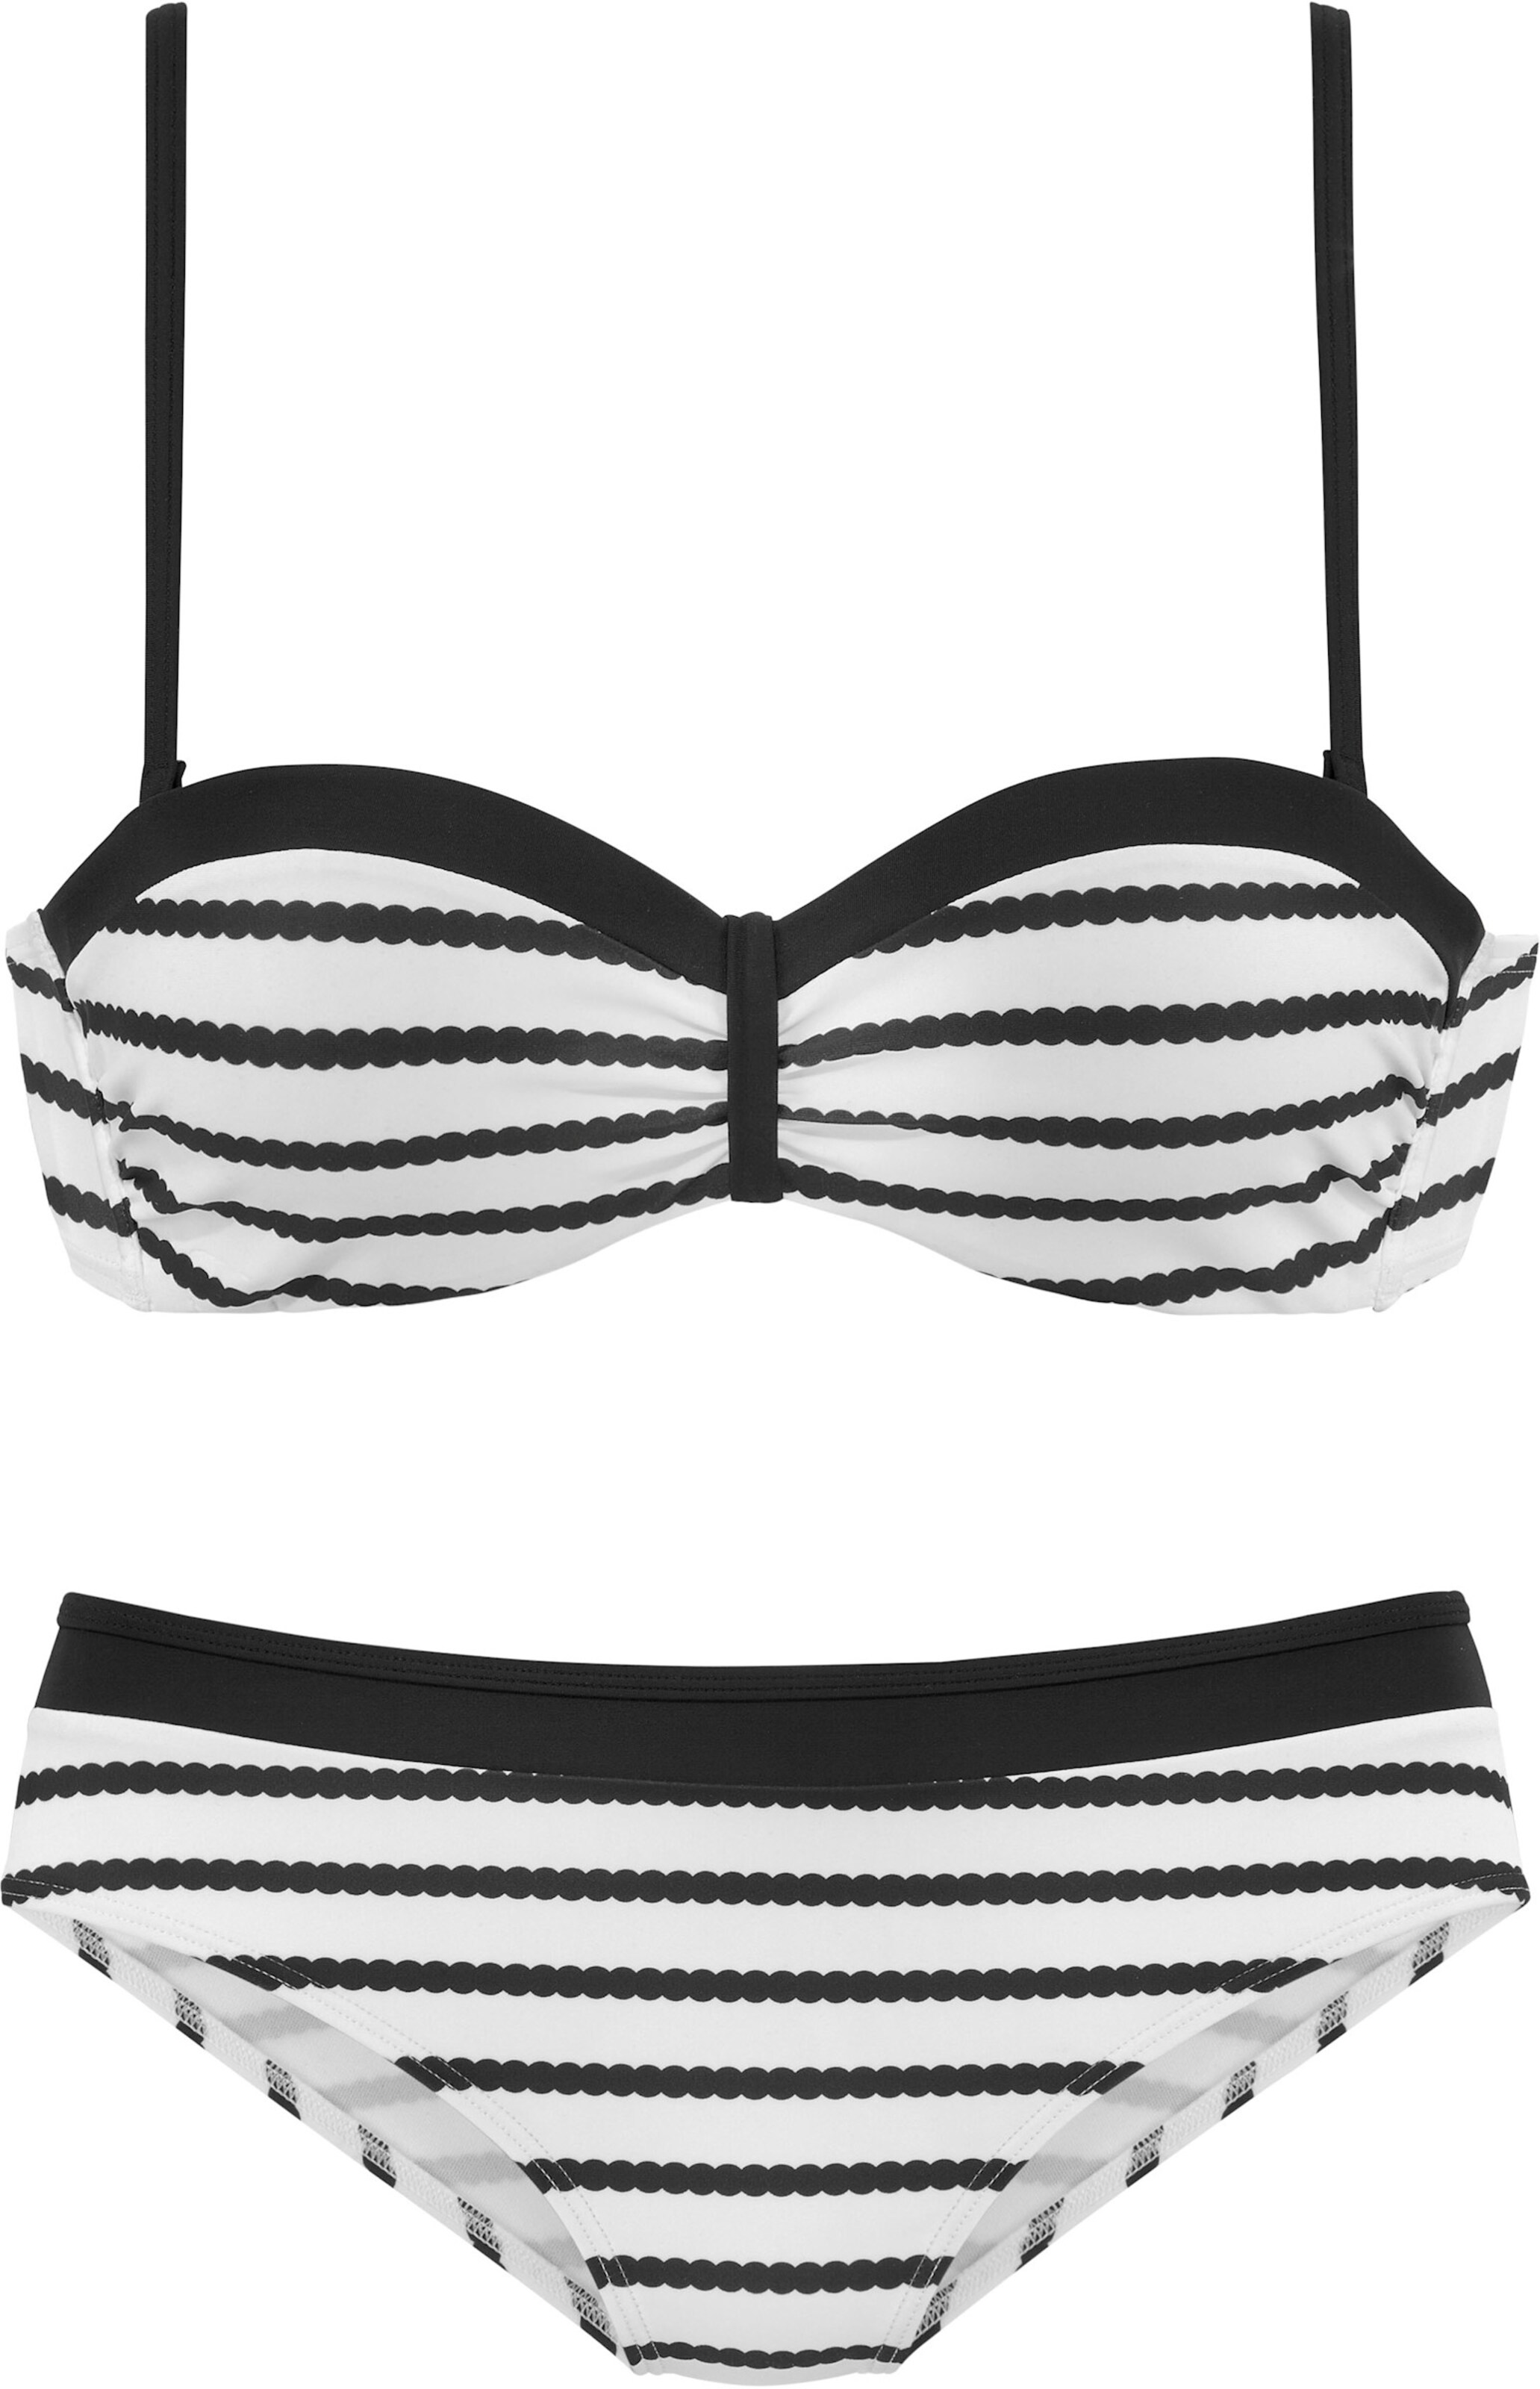 Witt Weiden Damen Bügel Bandeau Bikini schwarz weiß  - Onlineshop Witt Weiden